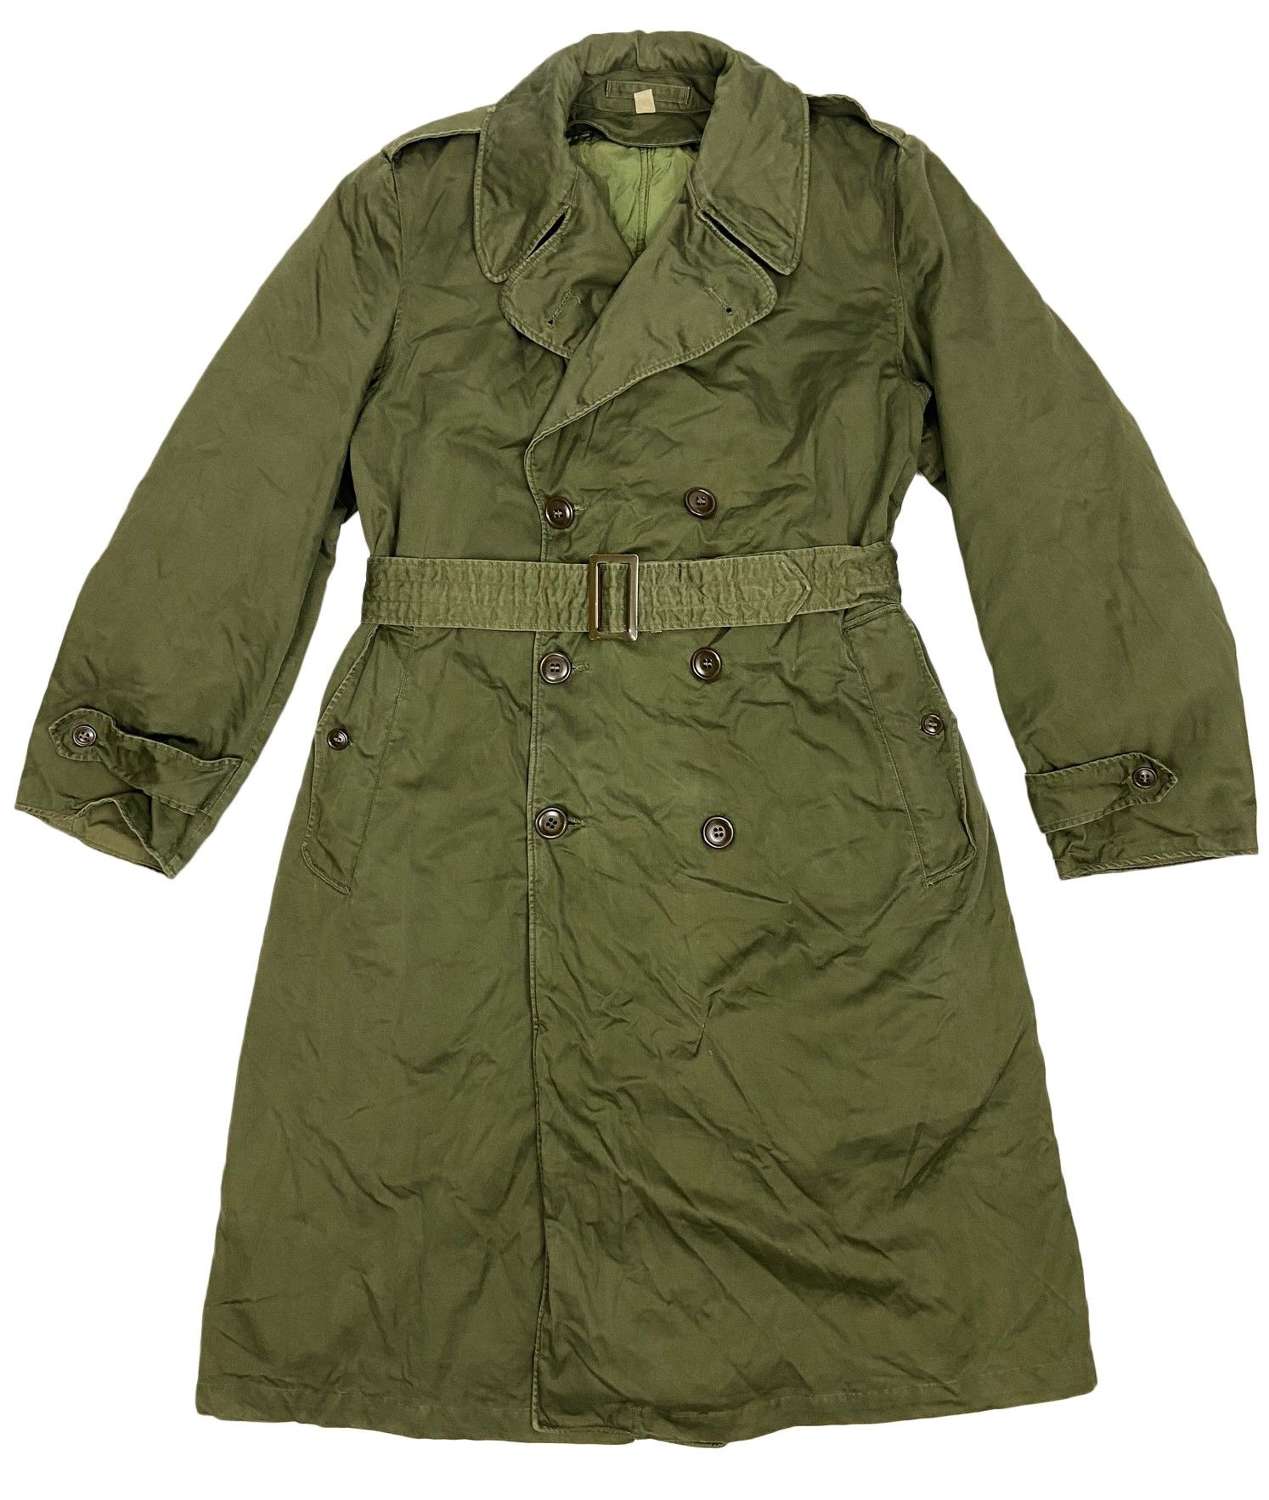 Original 1953 Dated US Army OG107 Raincoat - Size Regular Medium